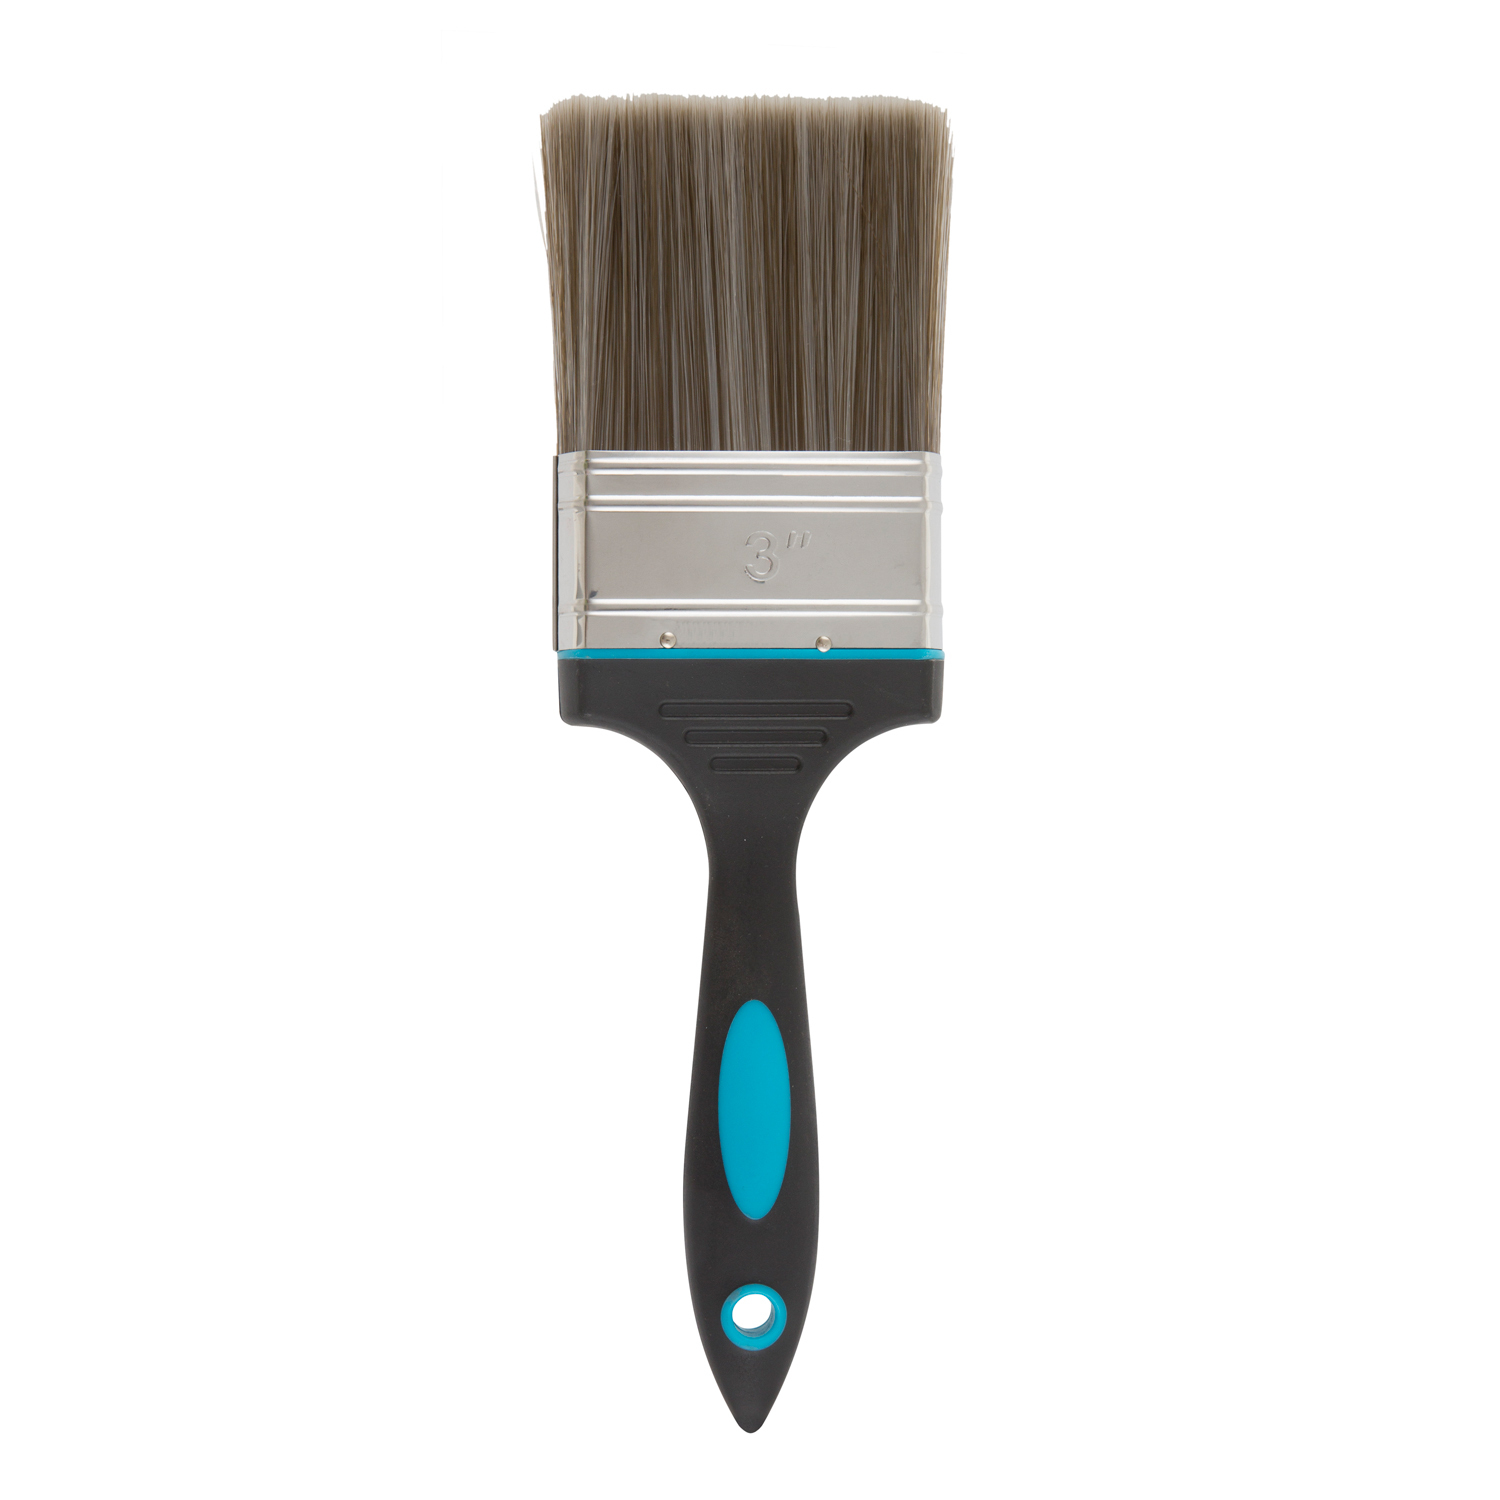 Prepare It 3 inch No Bristle Loss Paint and Varnish Brush Image 2